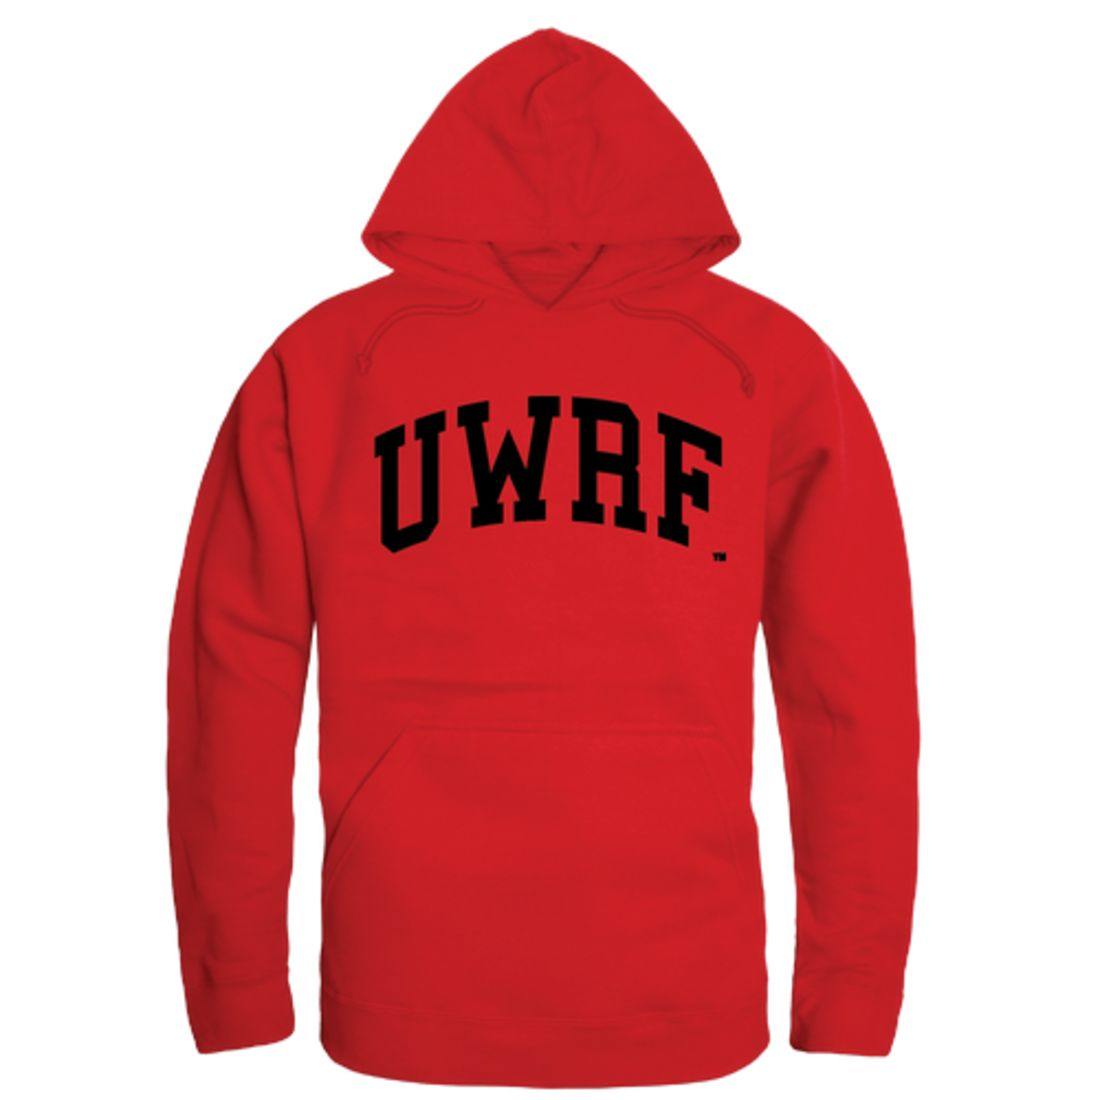 UWRF University of Wisconsin River Falls Falcons College Hoodie Sweatshirt Red-Campus-Wardrobe